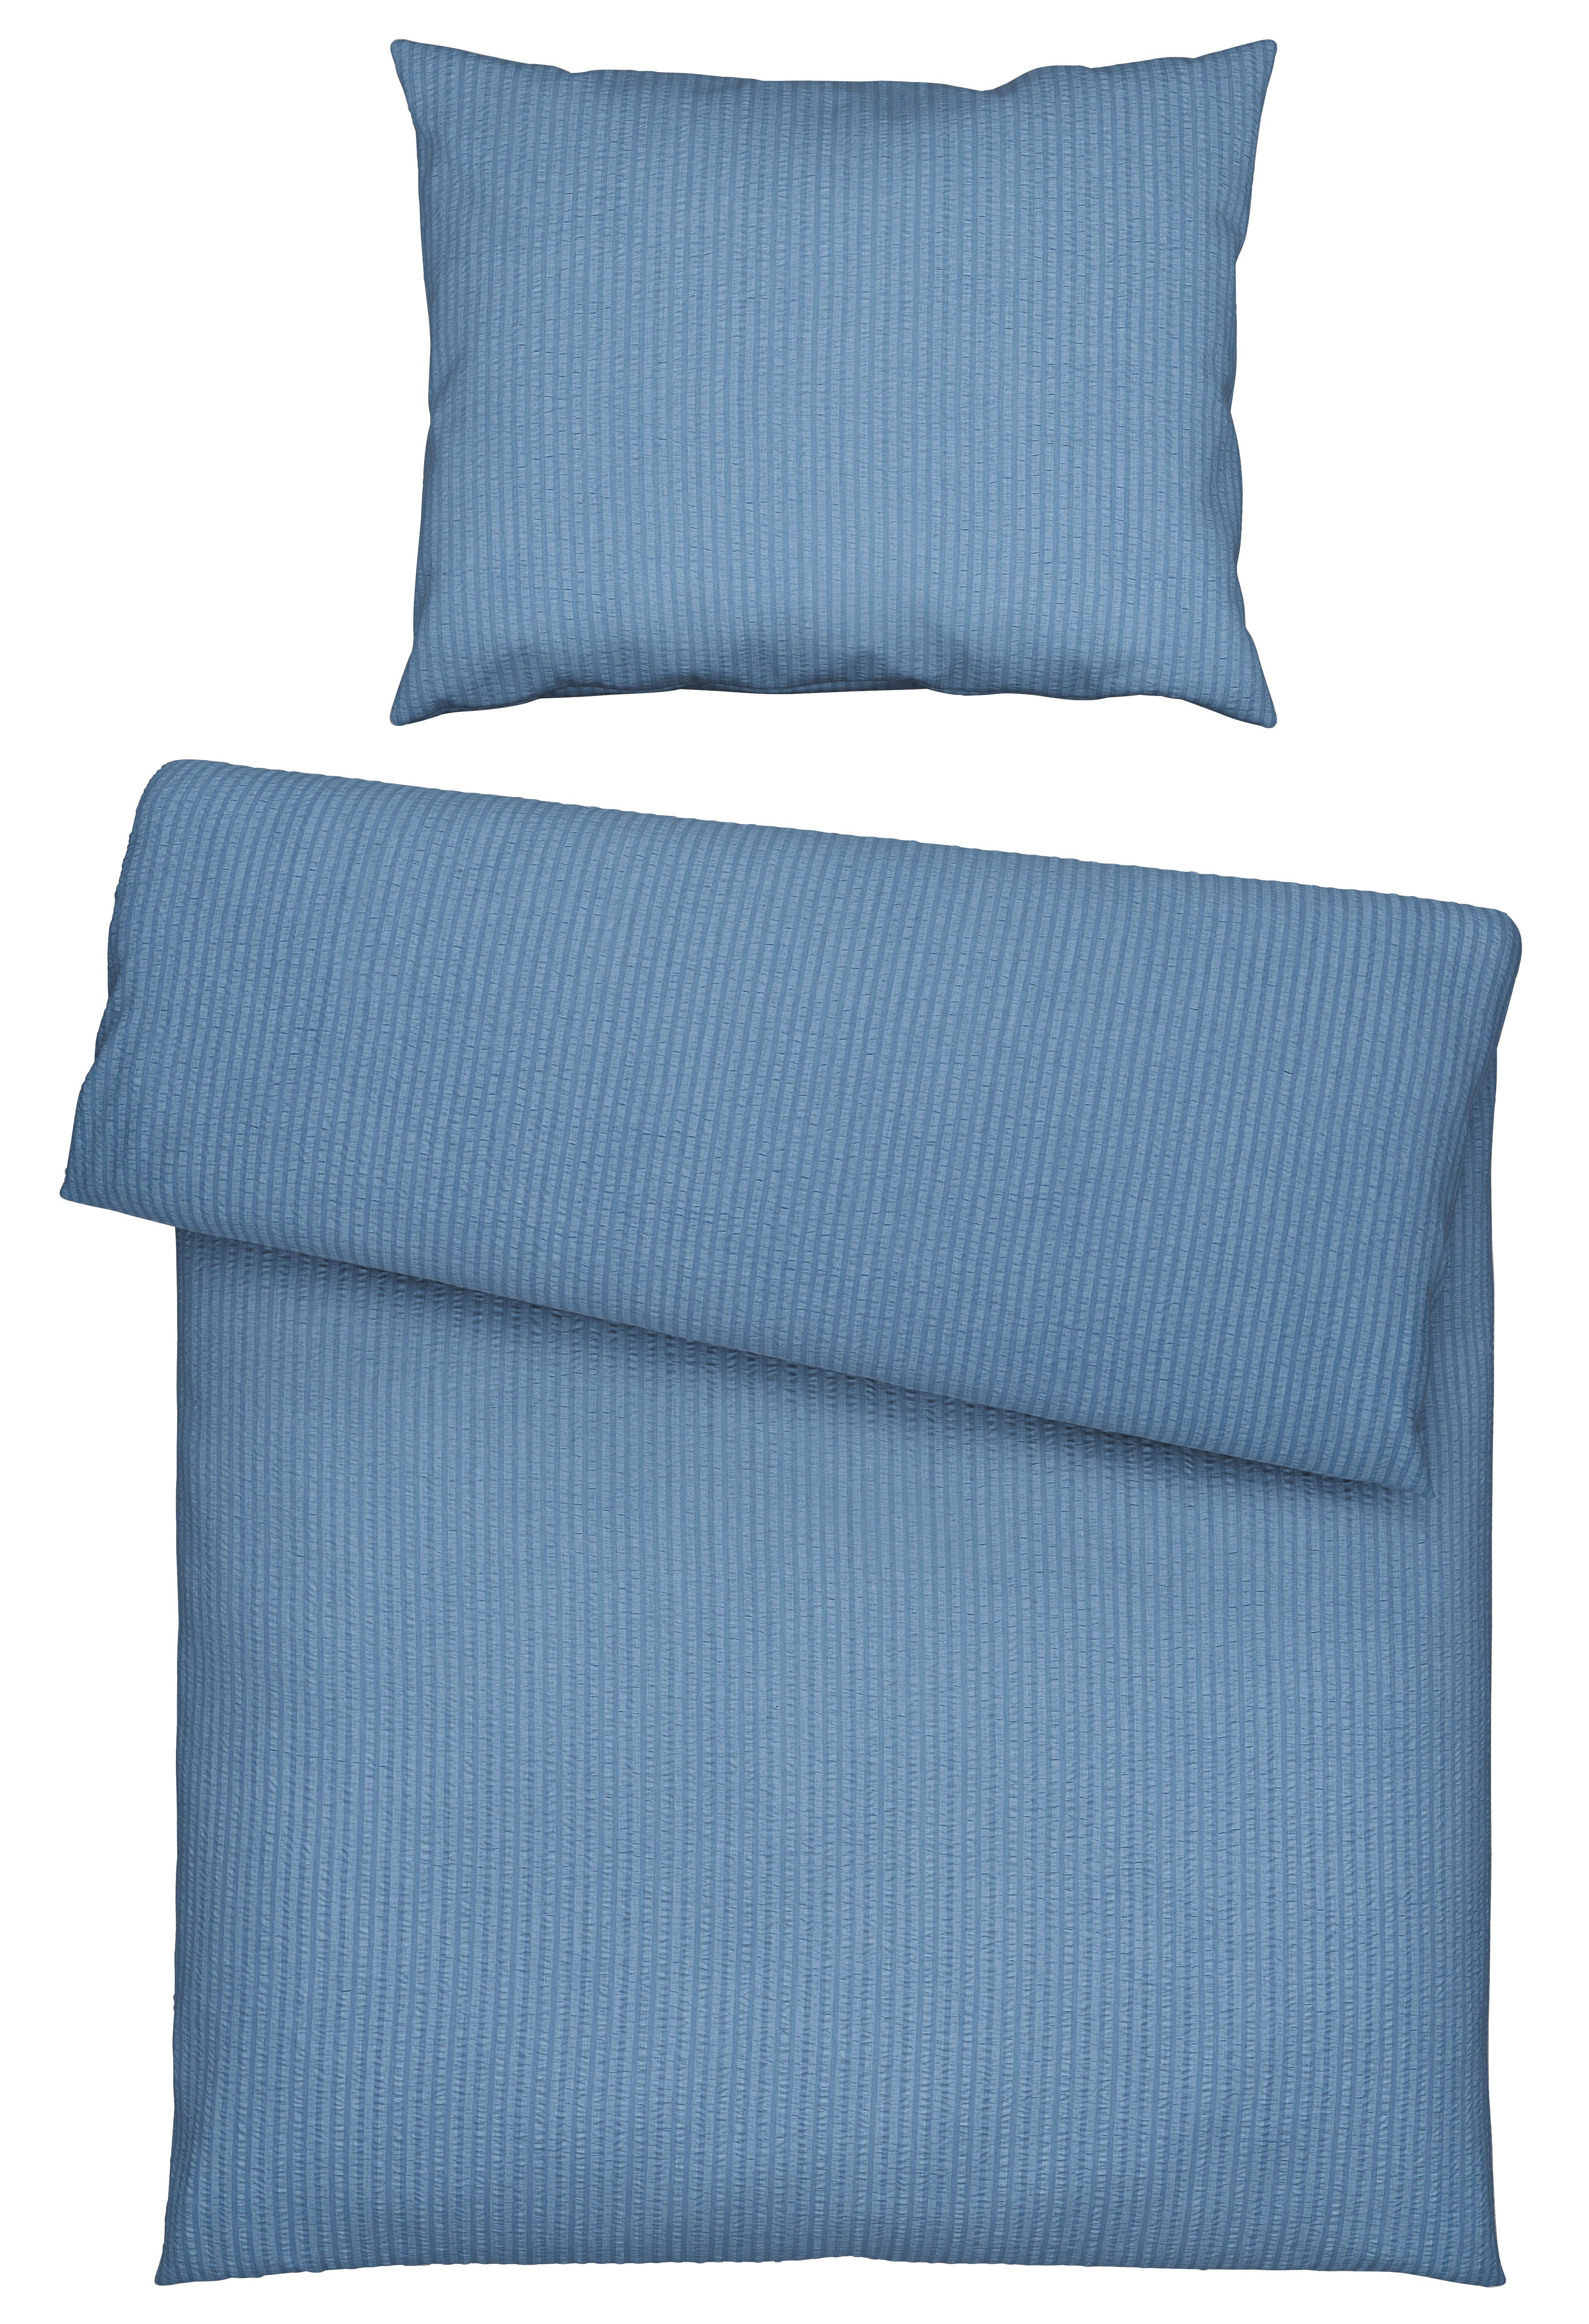 Povlečení Babs, 140/200cm, Modrá - modrá, Moderní, textil (140/200cm) - Modern Living